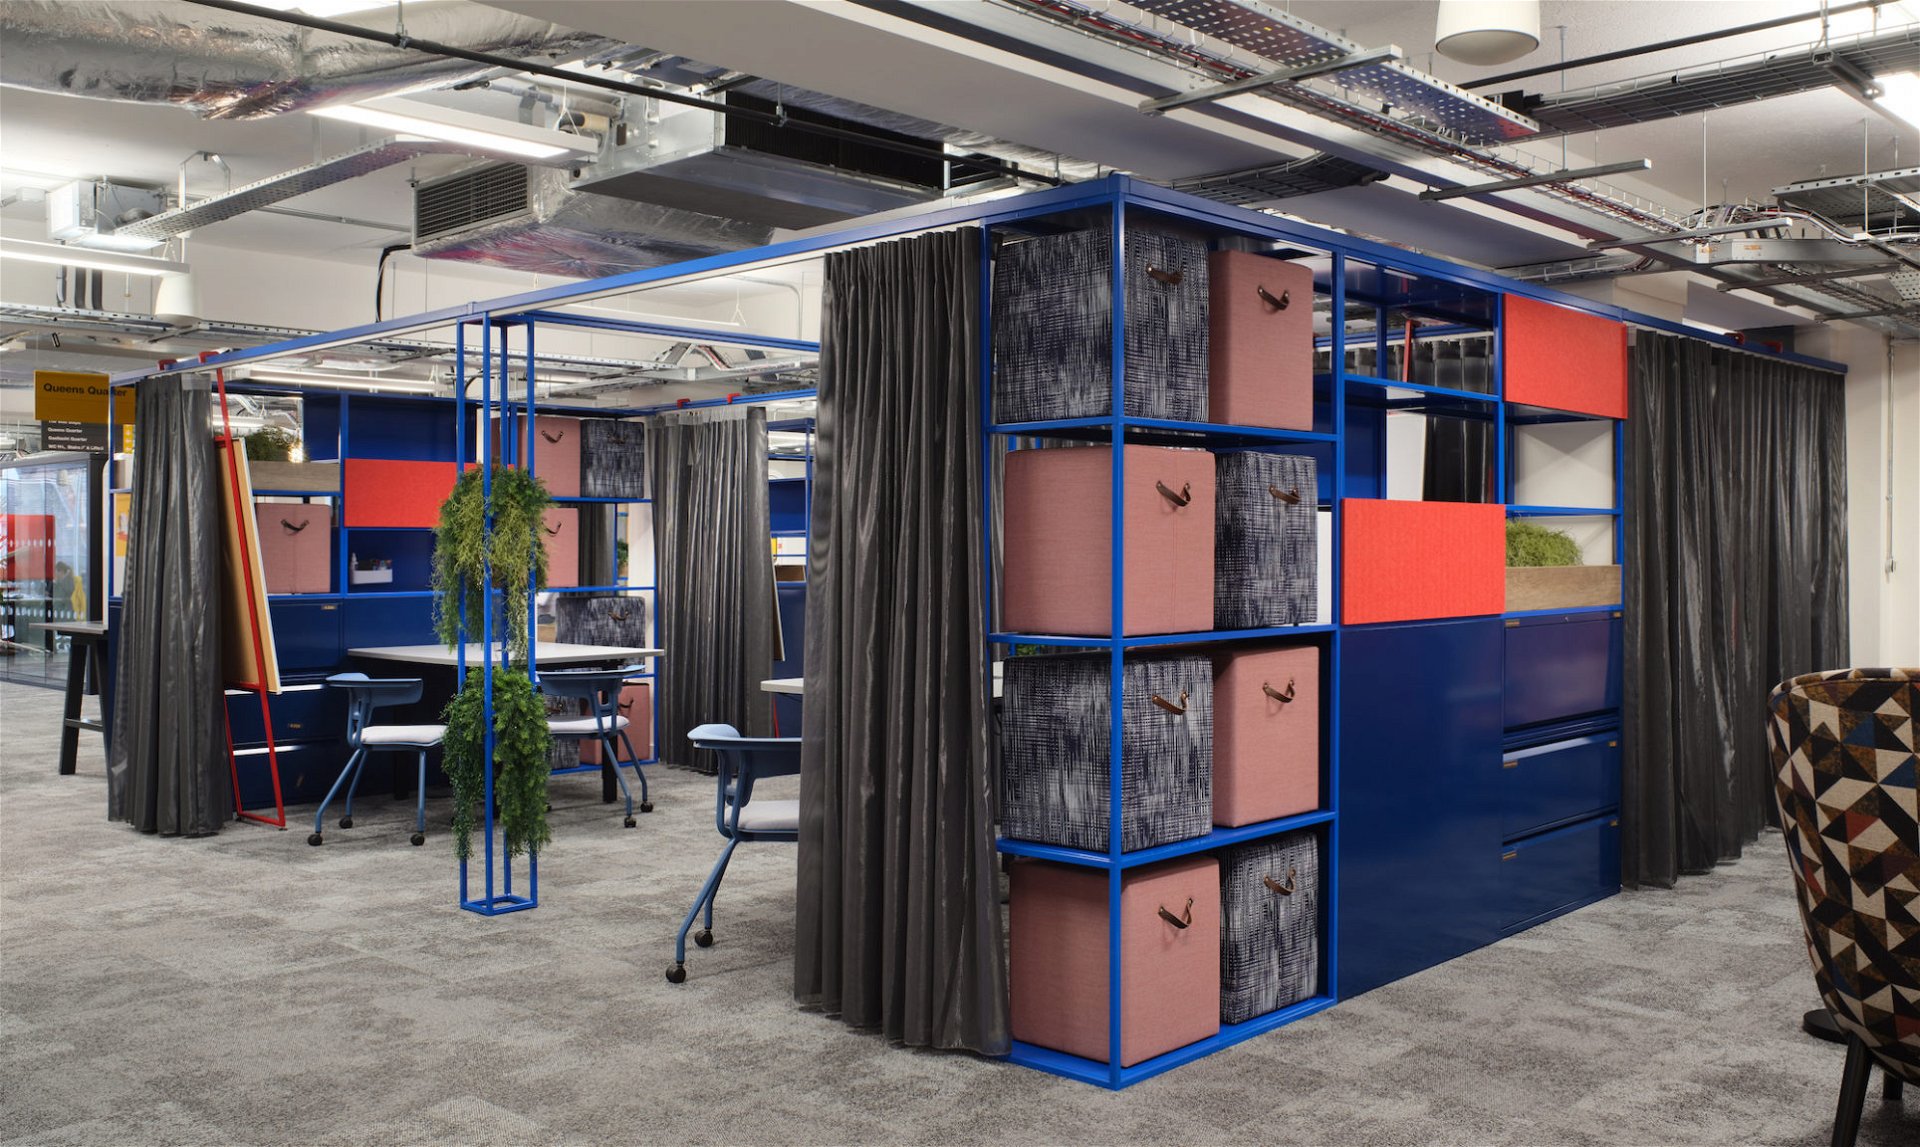 KI Furniture Brings Versatility and A Sense of Heritage to PwC’s New Belfast Office - LTD - News